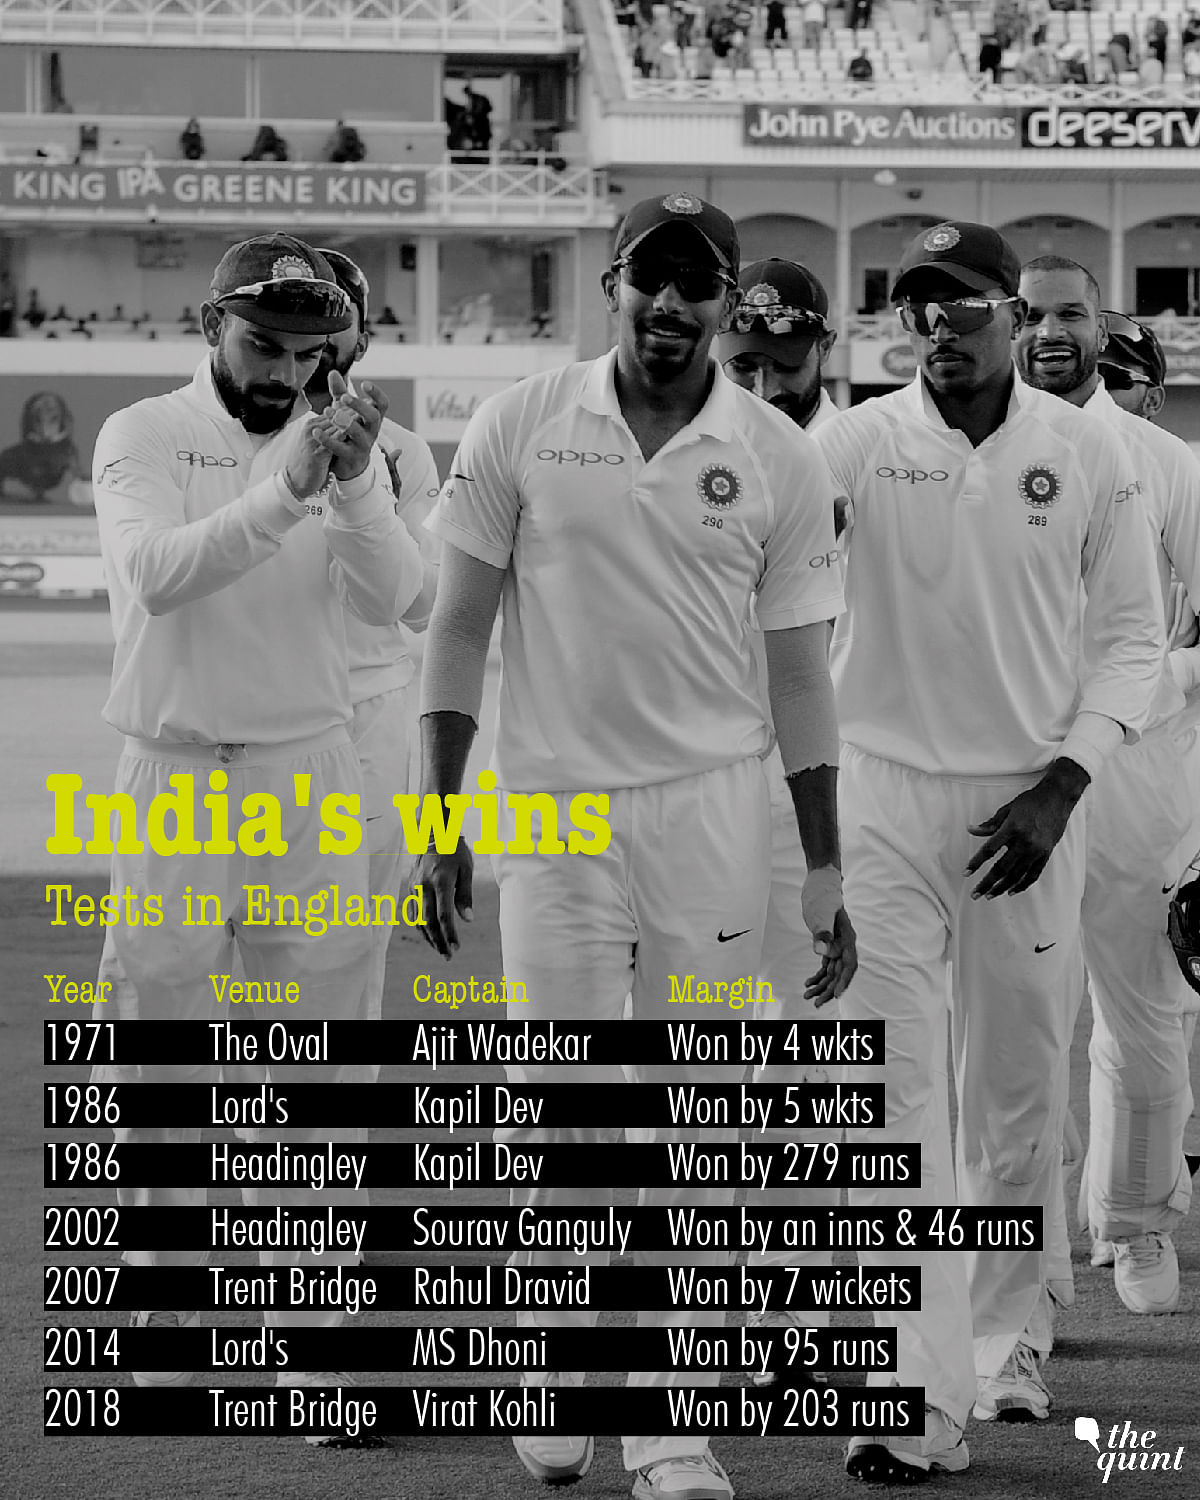 Trent Bridge Test: India beat England by 23 runs, England lead series 2-1.